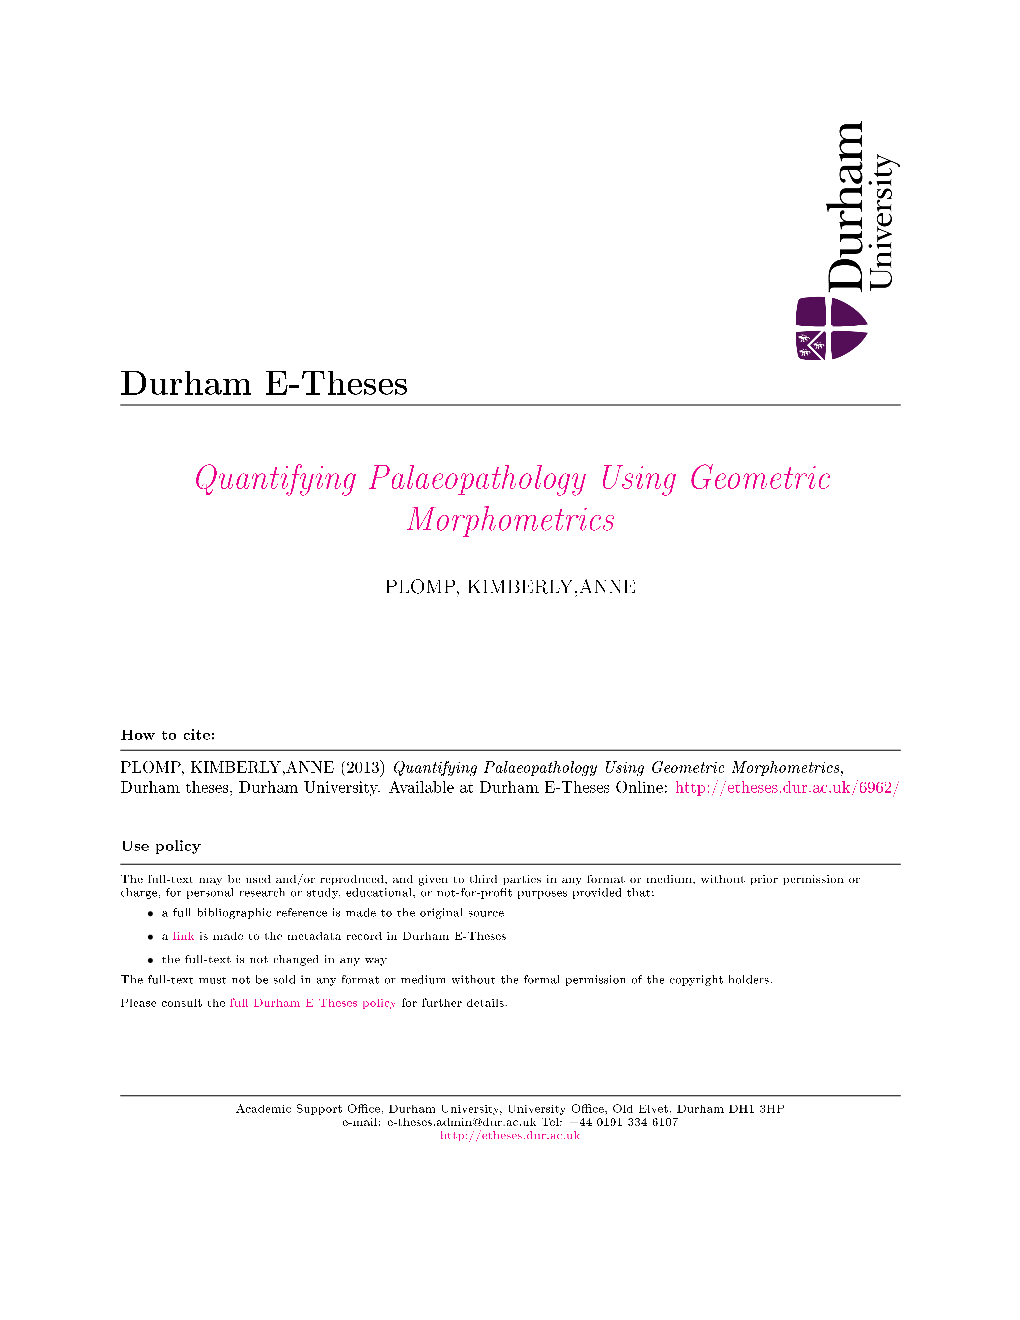 Quantifying Palaeopathology Using Geometric Morphometrics